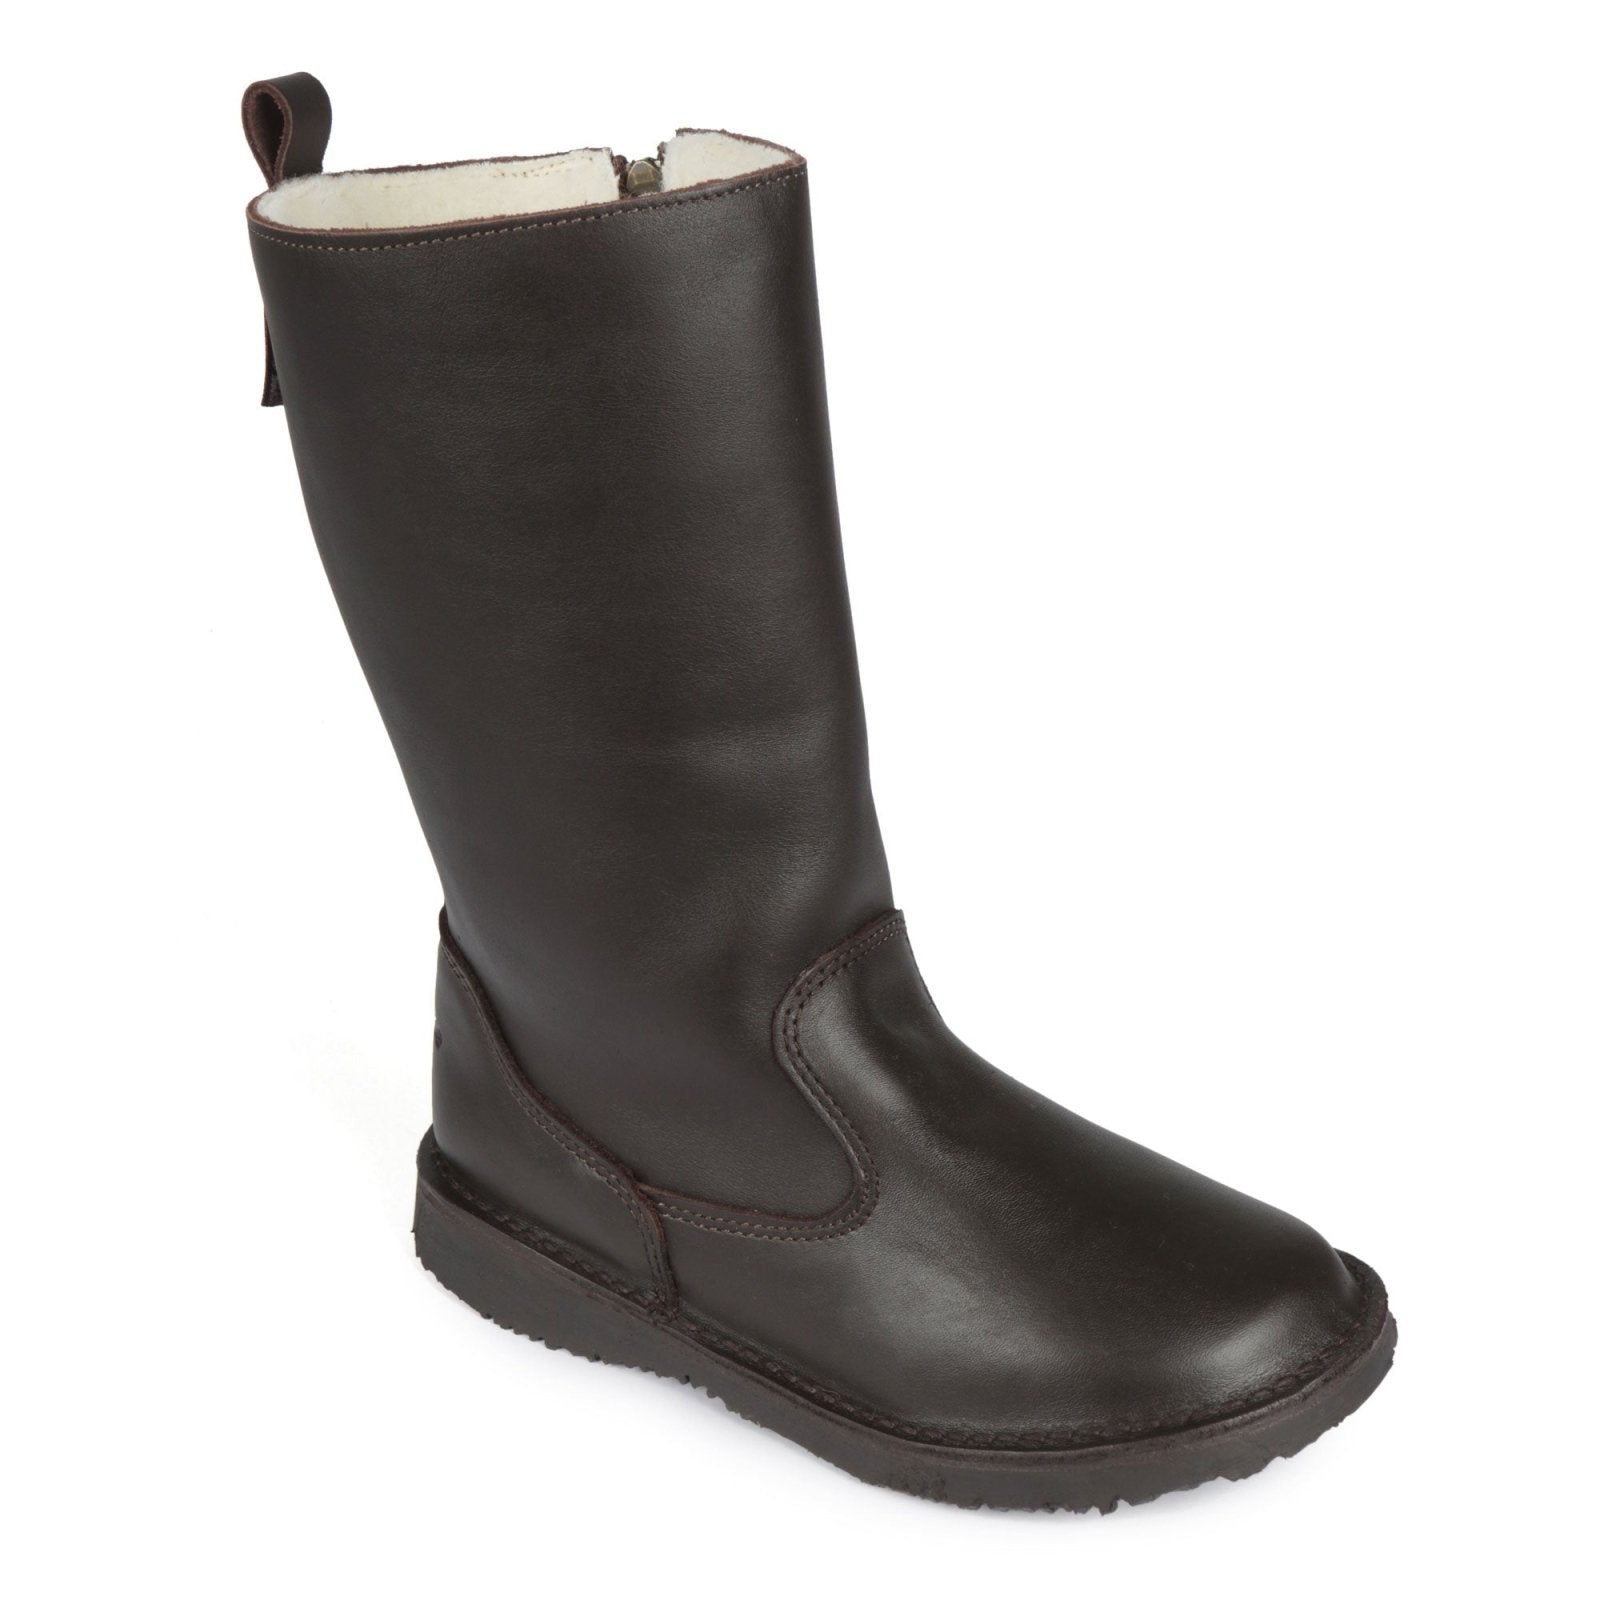 Eskimo 100% wool - lined ladies premium leather boot - Bundu Oxblood - Freestyle SA Proudly local leather boots veldskoens vellies leather shoes suede veldskoens